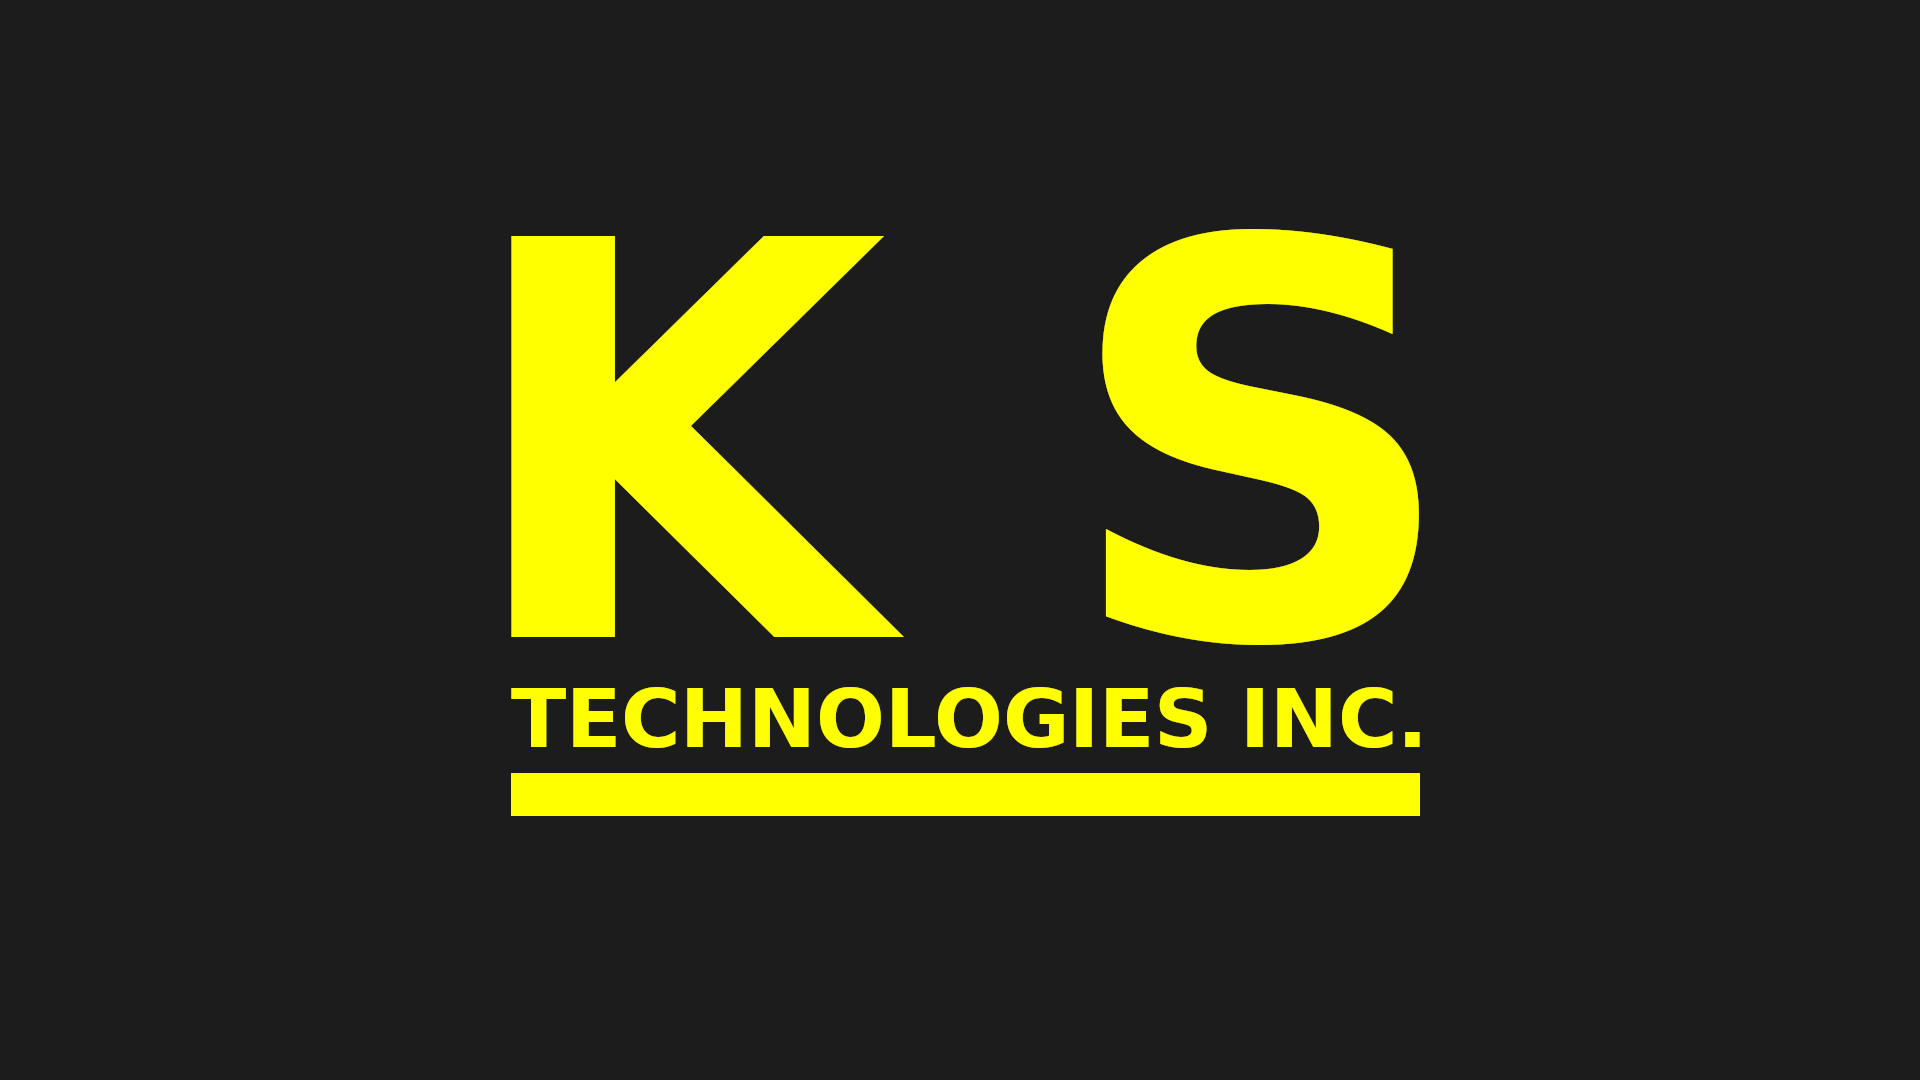 KS-TECHNOLOGIES INC.